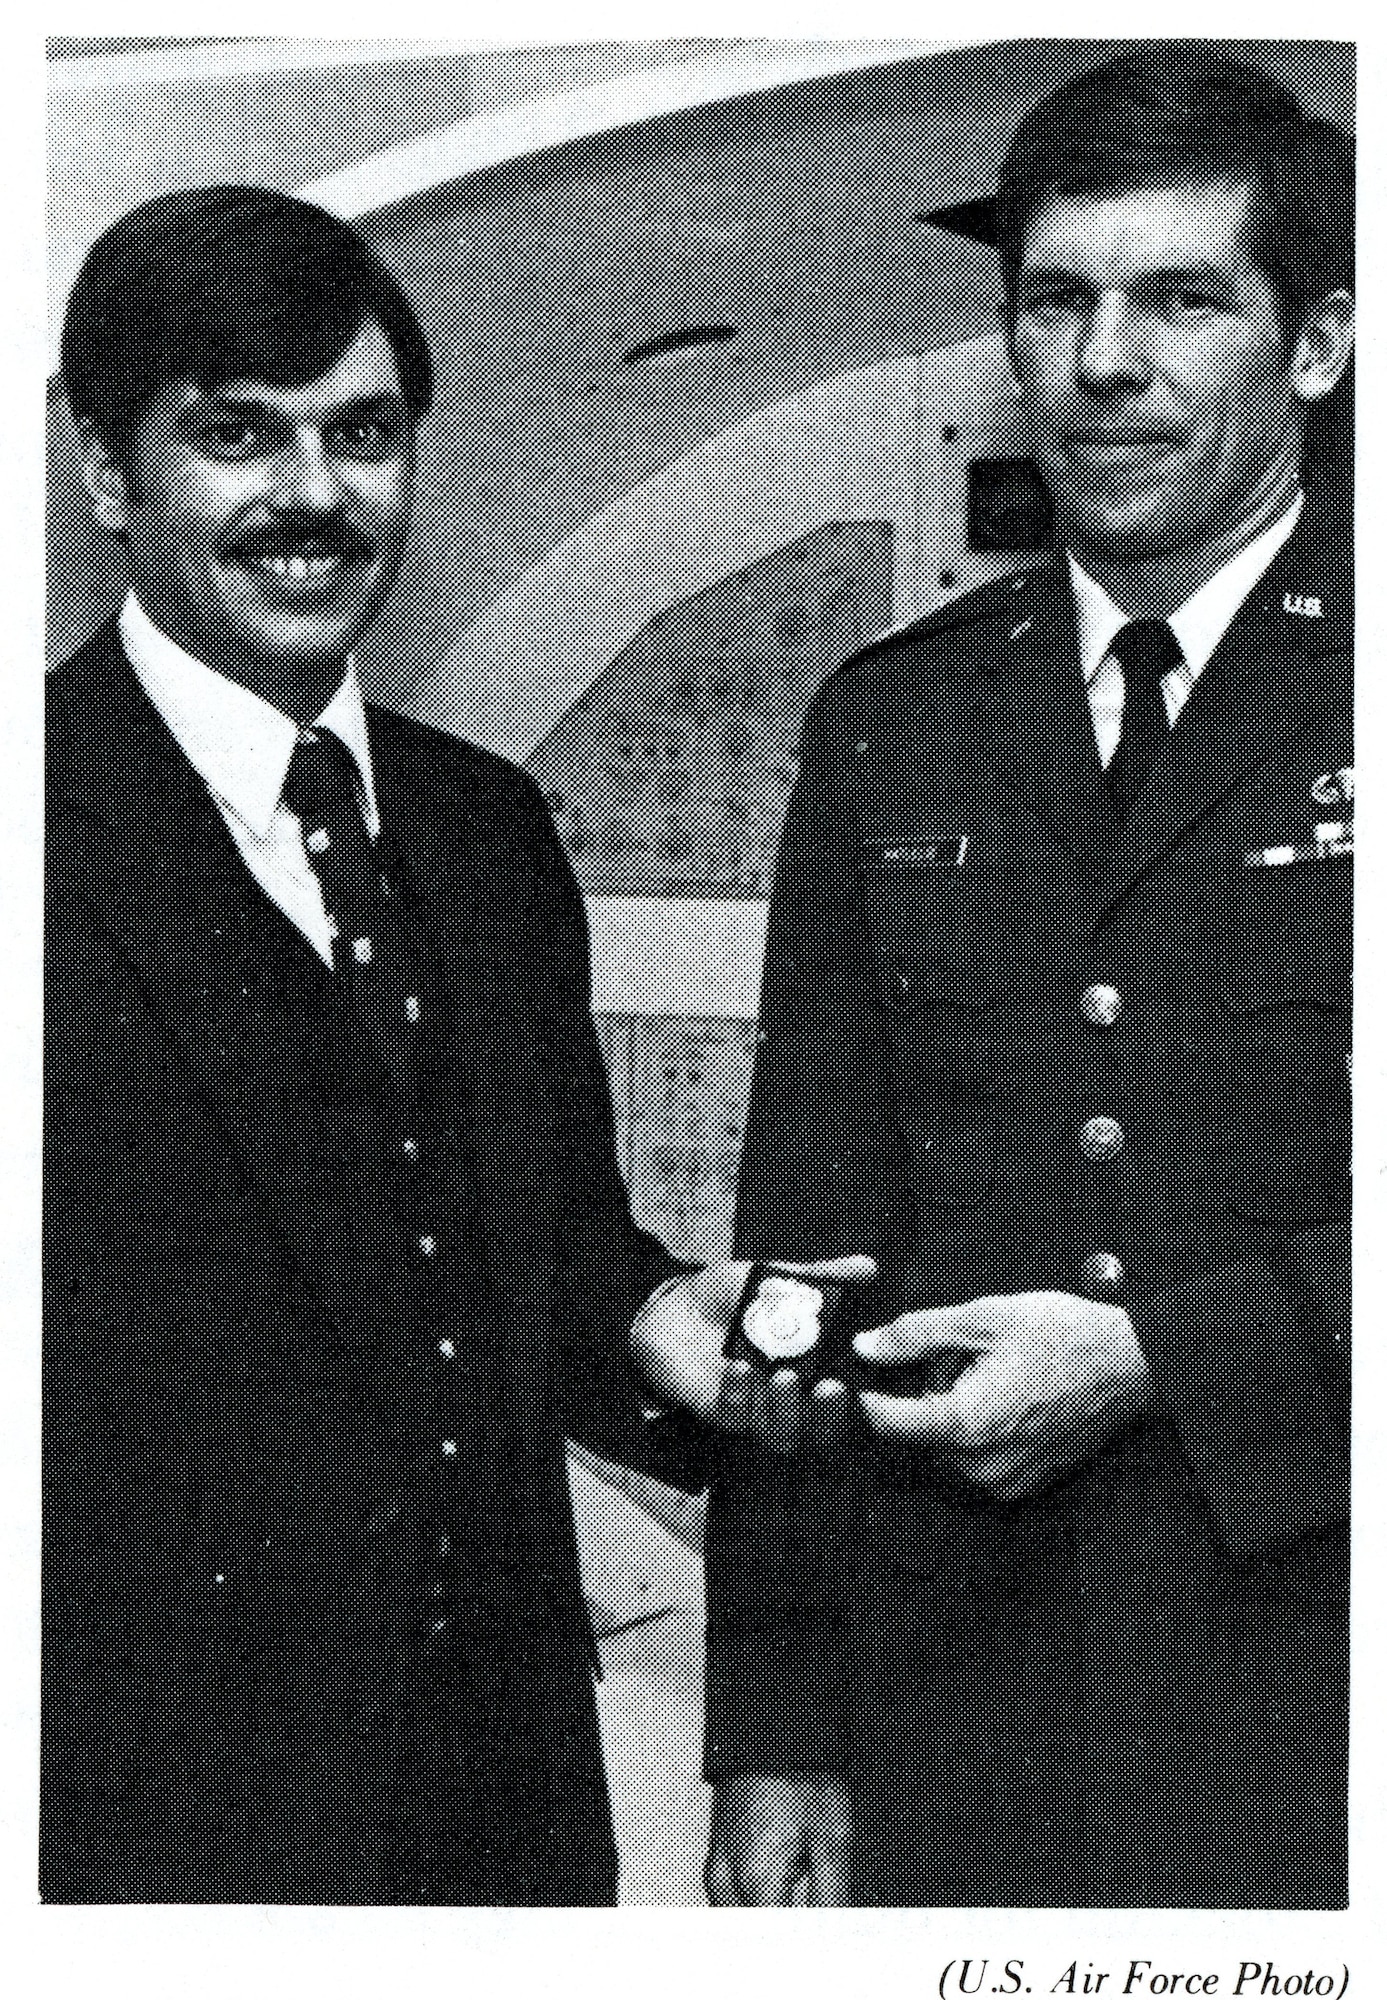 Special Agent Warren Woerner (left), OSI Detachment 1402, presents Badge Number 1 to Major John Hatlelid (right), Air Force Academy Project Officer on September 17, 1982.